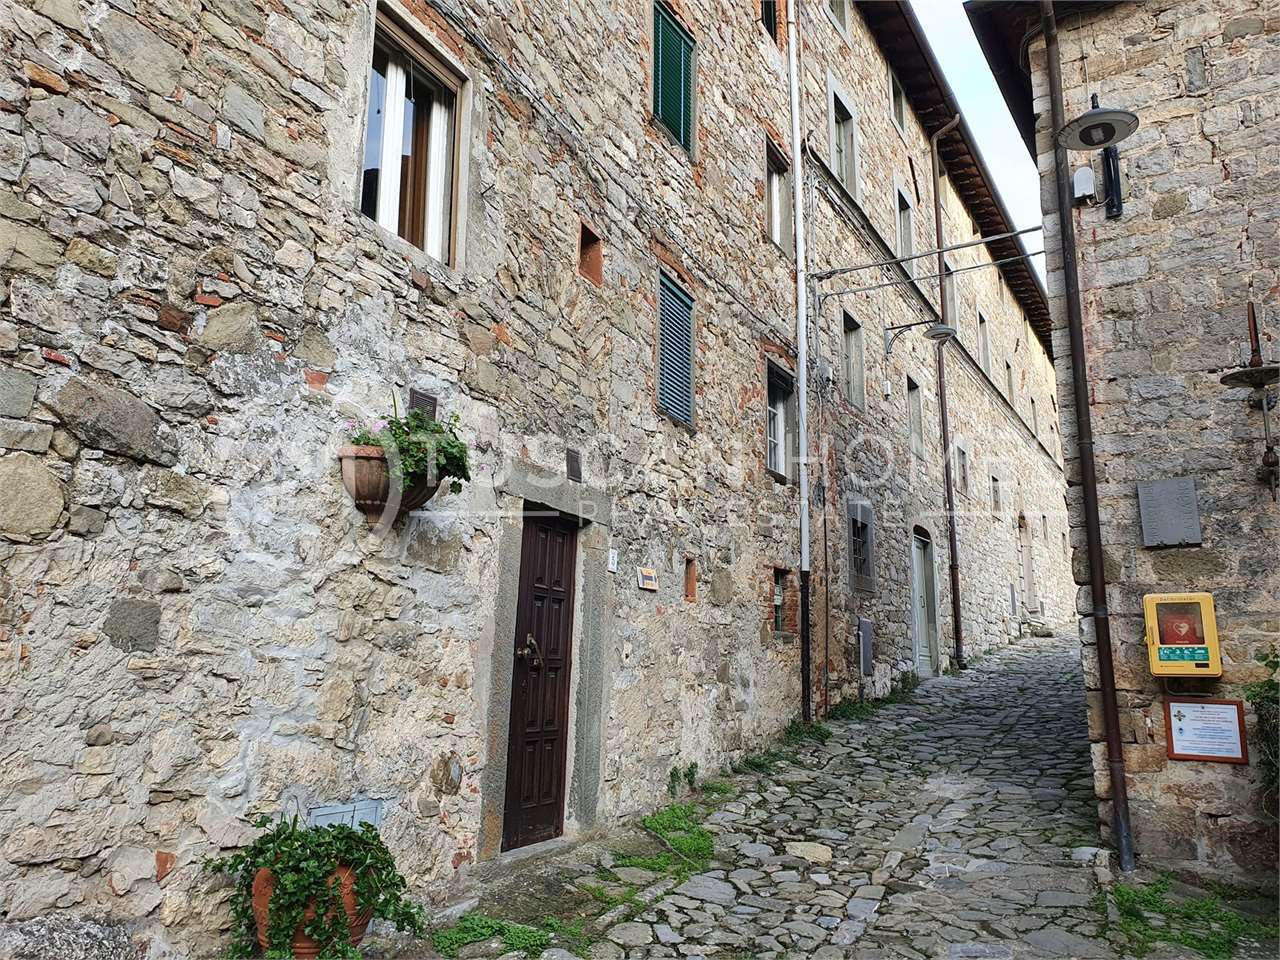 for-sale-forsale-tuscany-italy-barga-garfagnana-lucca-stone-house-